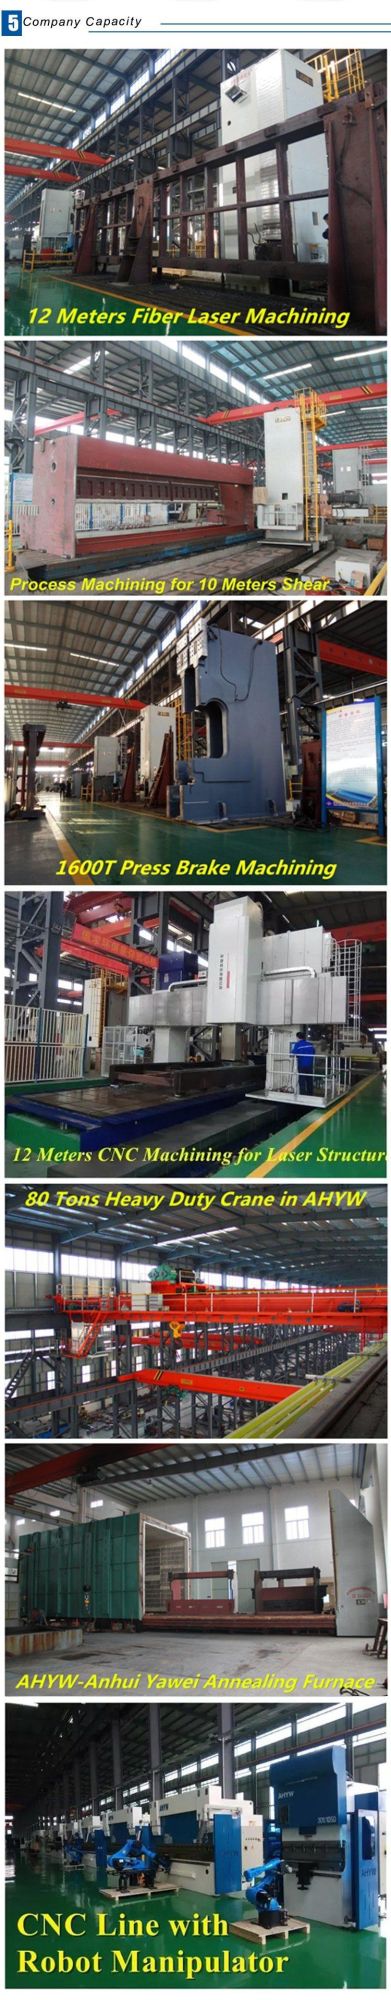 4X2500 Hydraulic CNC Shearing Machine for Cuntting Metal Plate